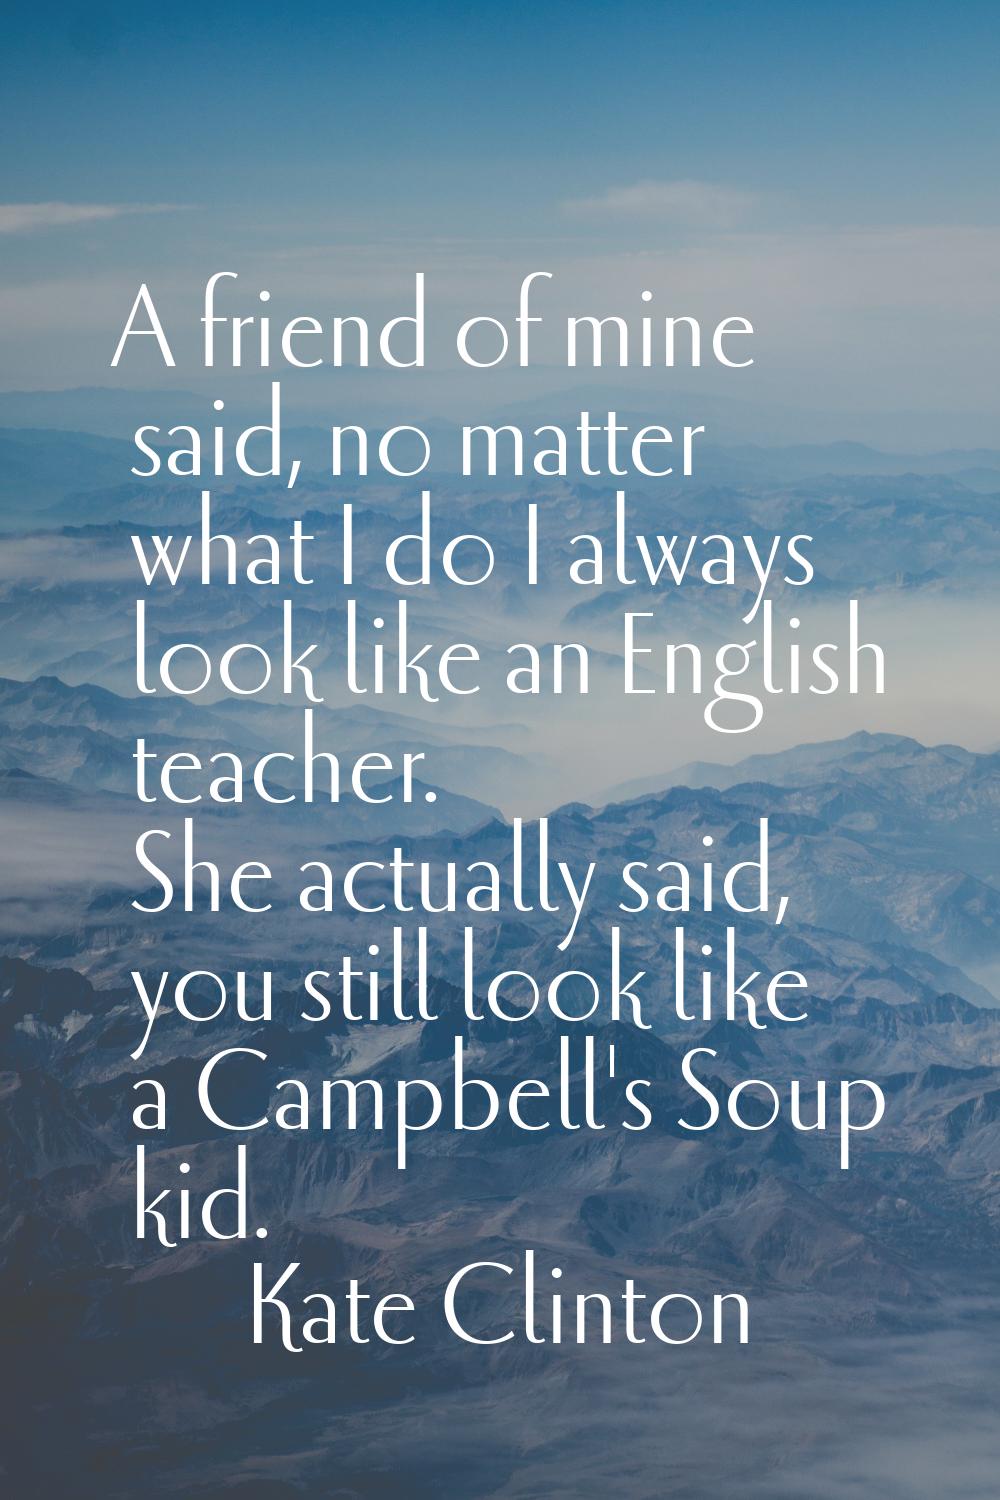 A friend of mine said, no matter what I do I always look like an English teacher. She actually said